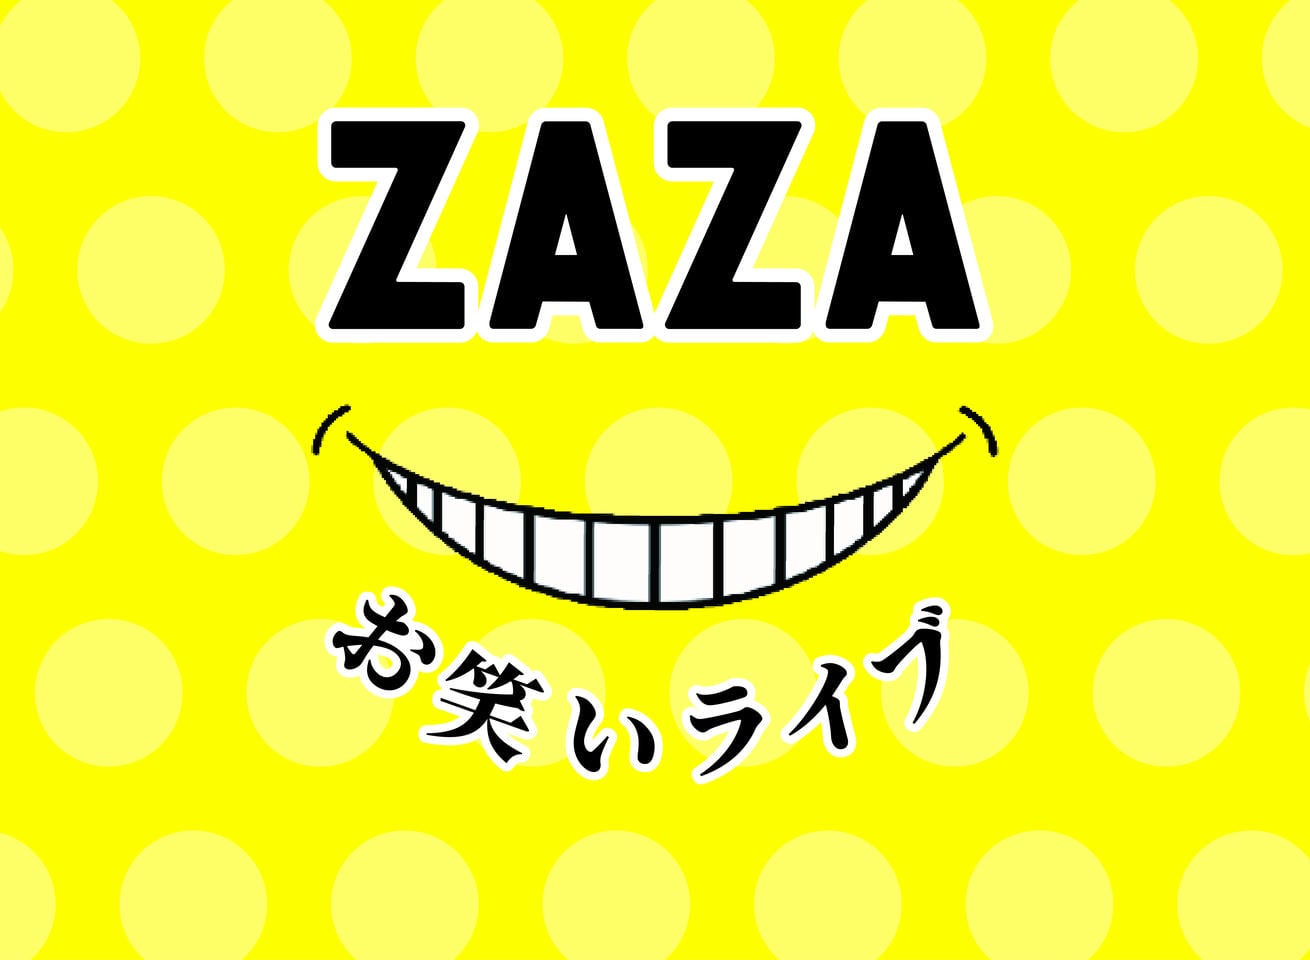 Dotombori ZAZA<br>
ZAZA Comedy Live